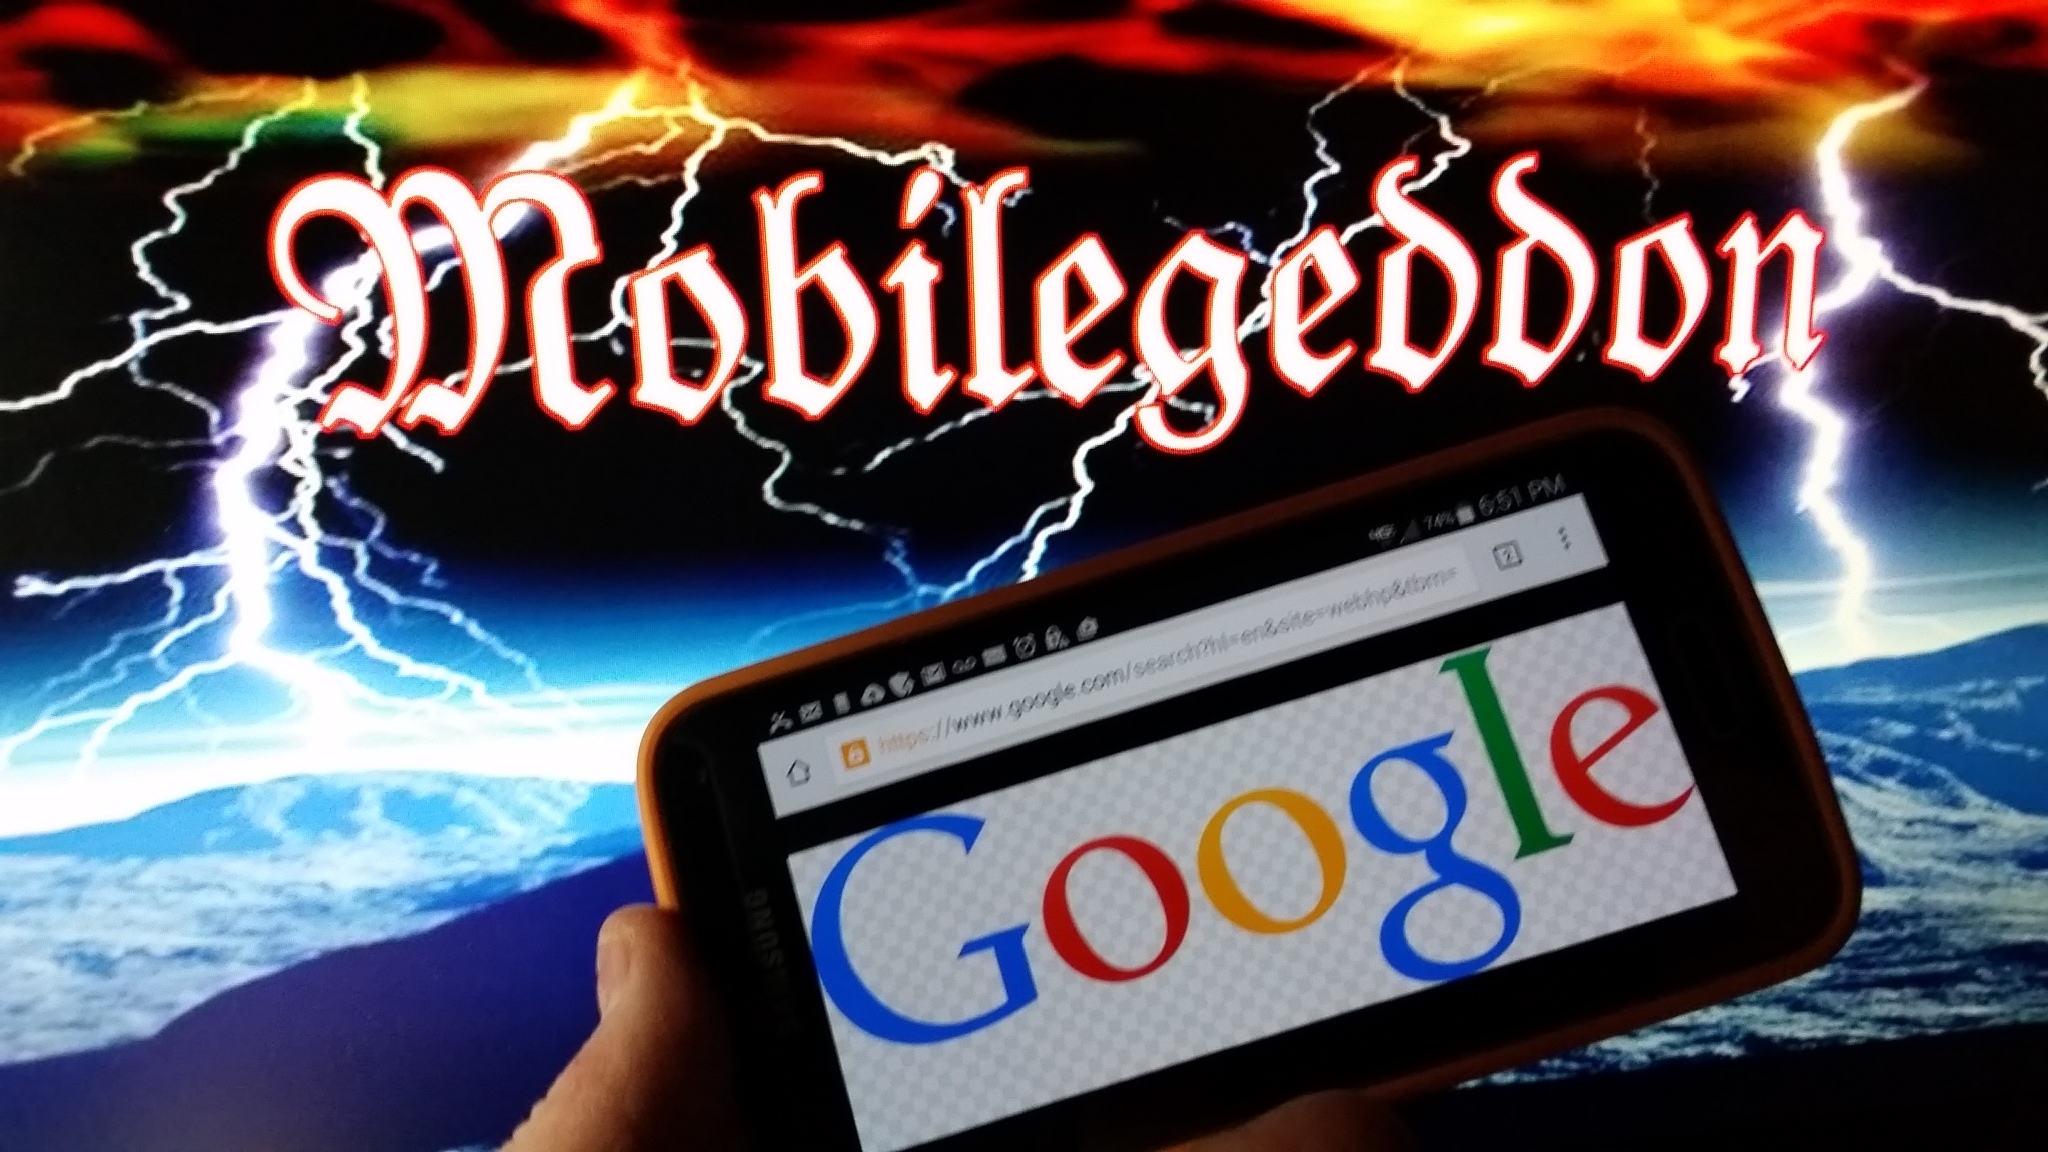 Google Mobilegeddon Coming April 21